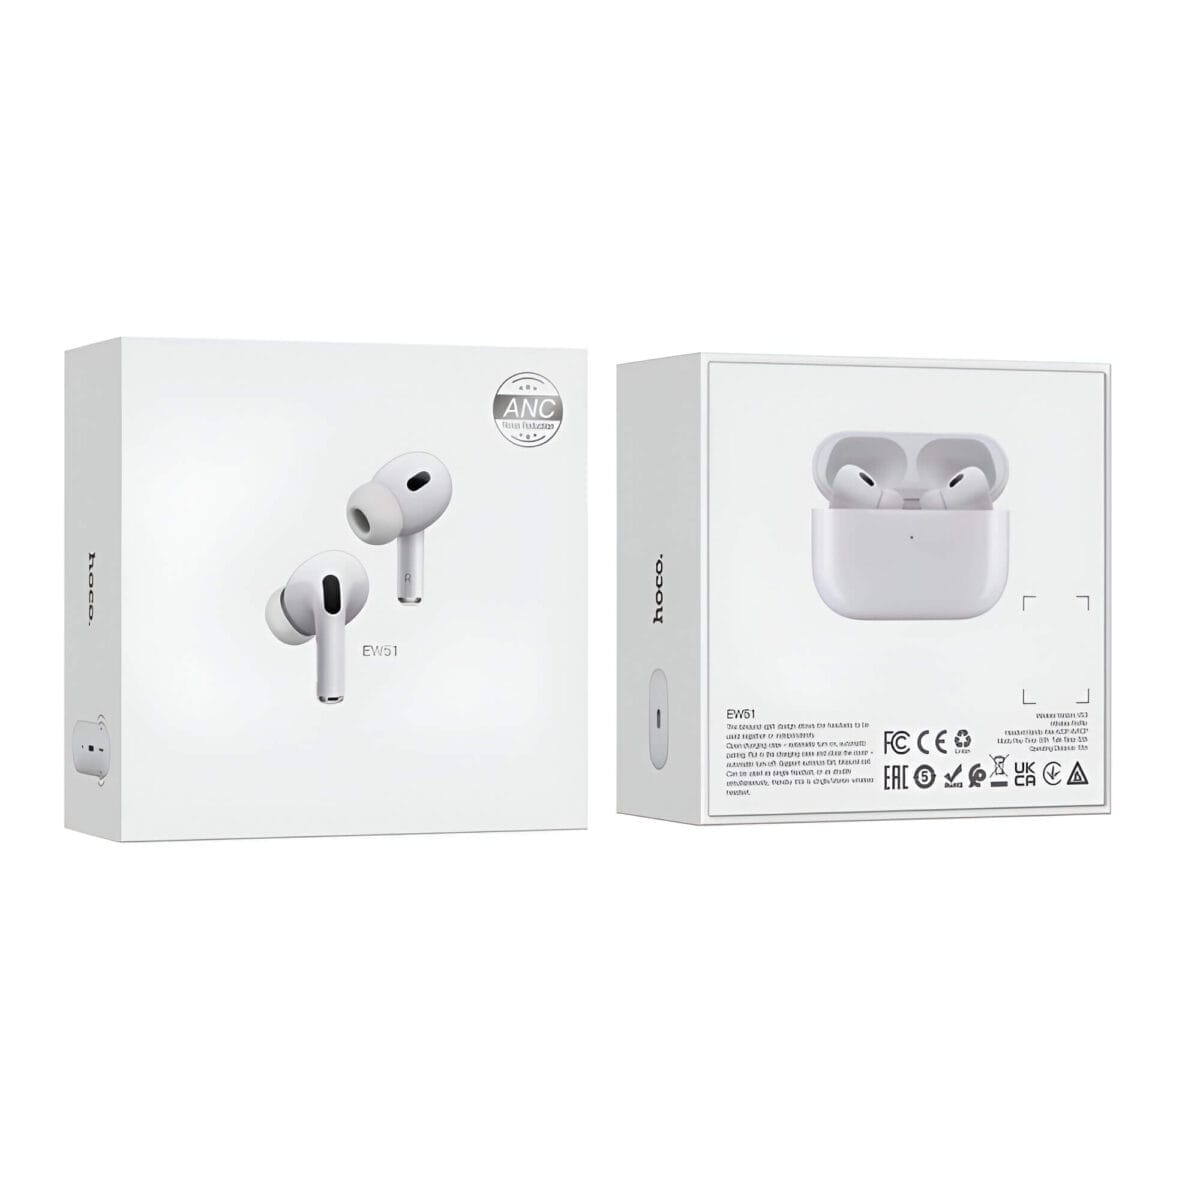 Hoco EW51 ANC True Wireless Bluetooth Earbuds – White Color